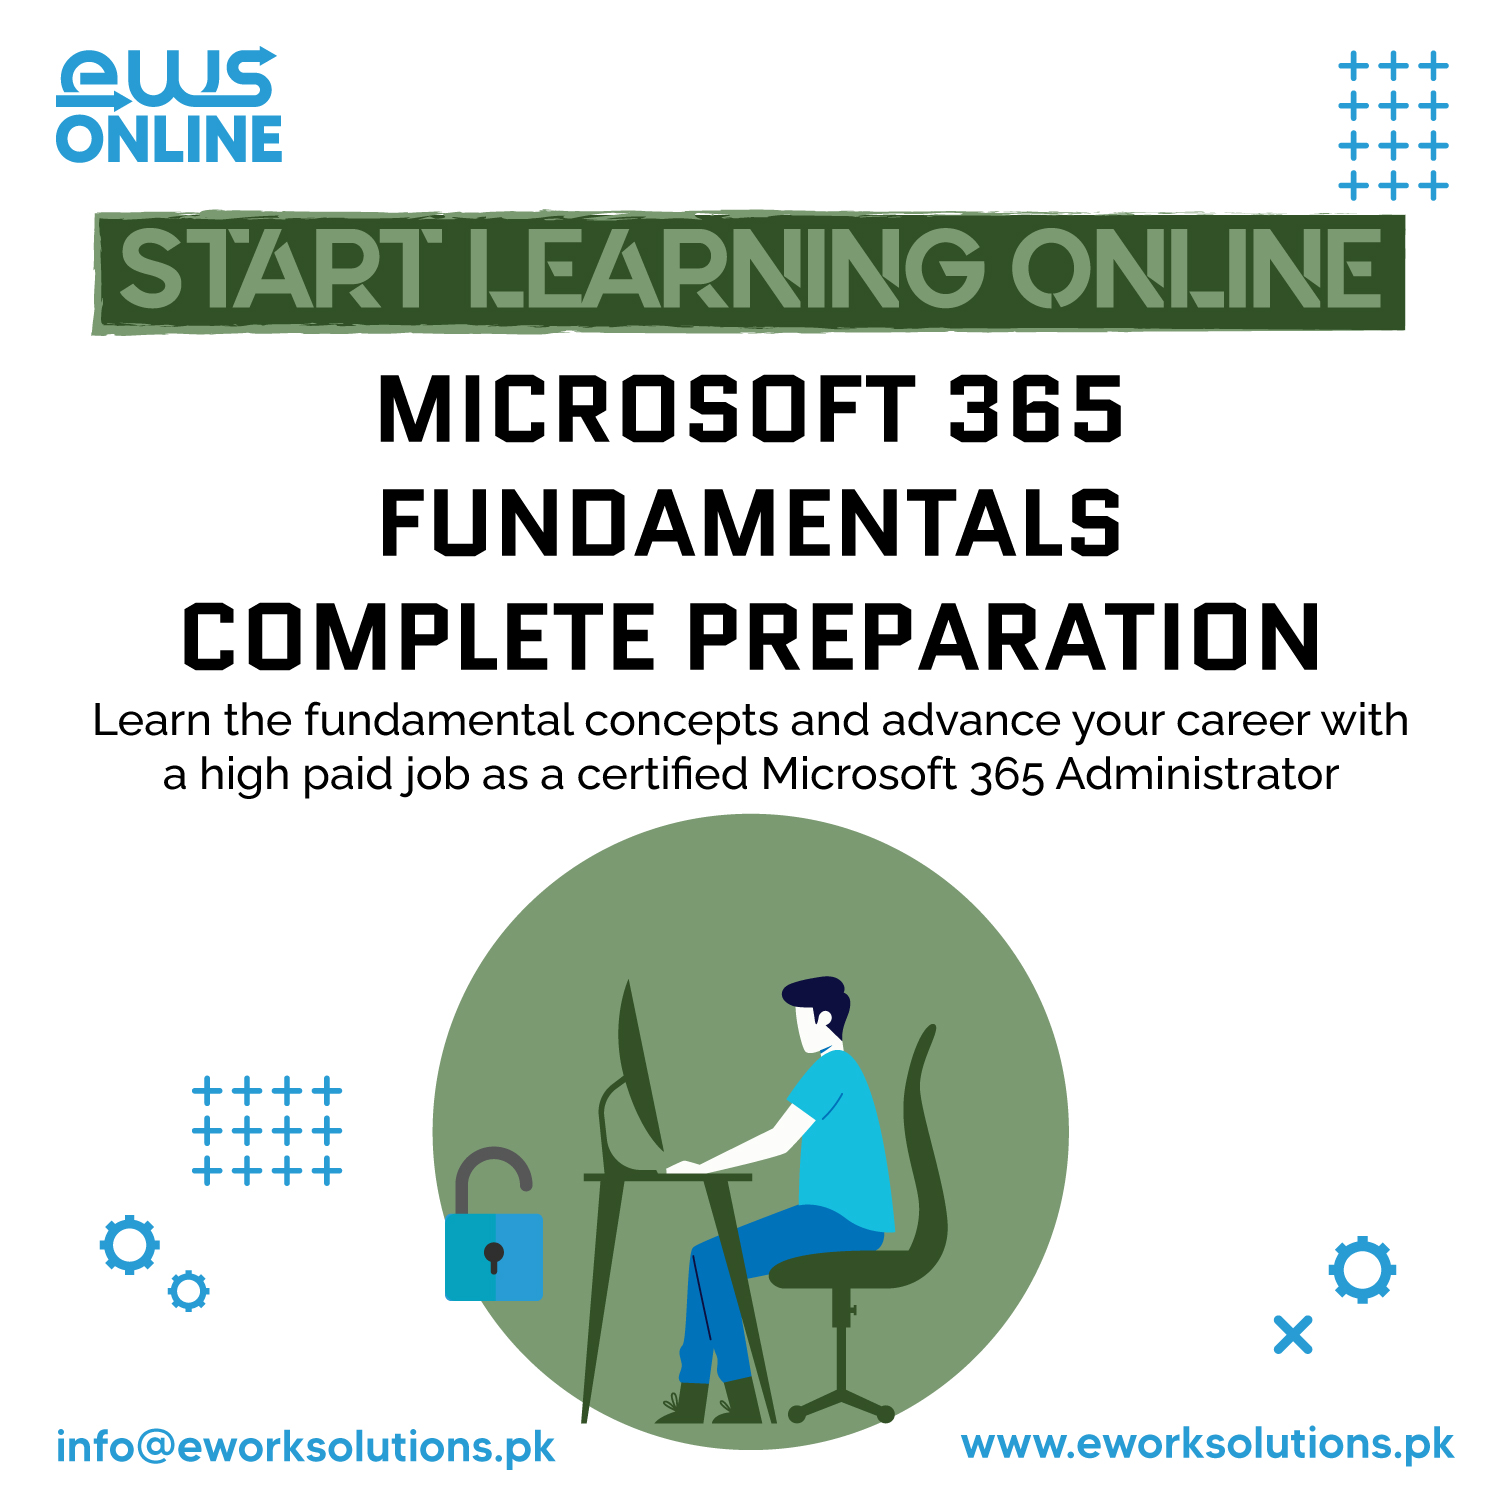 Microsoft 365 Fundamentals Complete Preparation